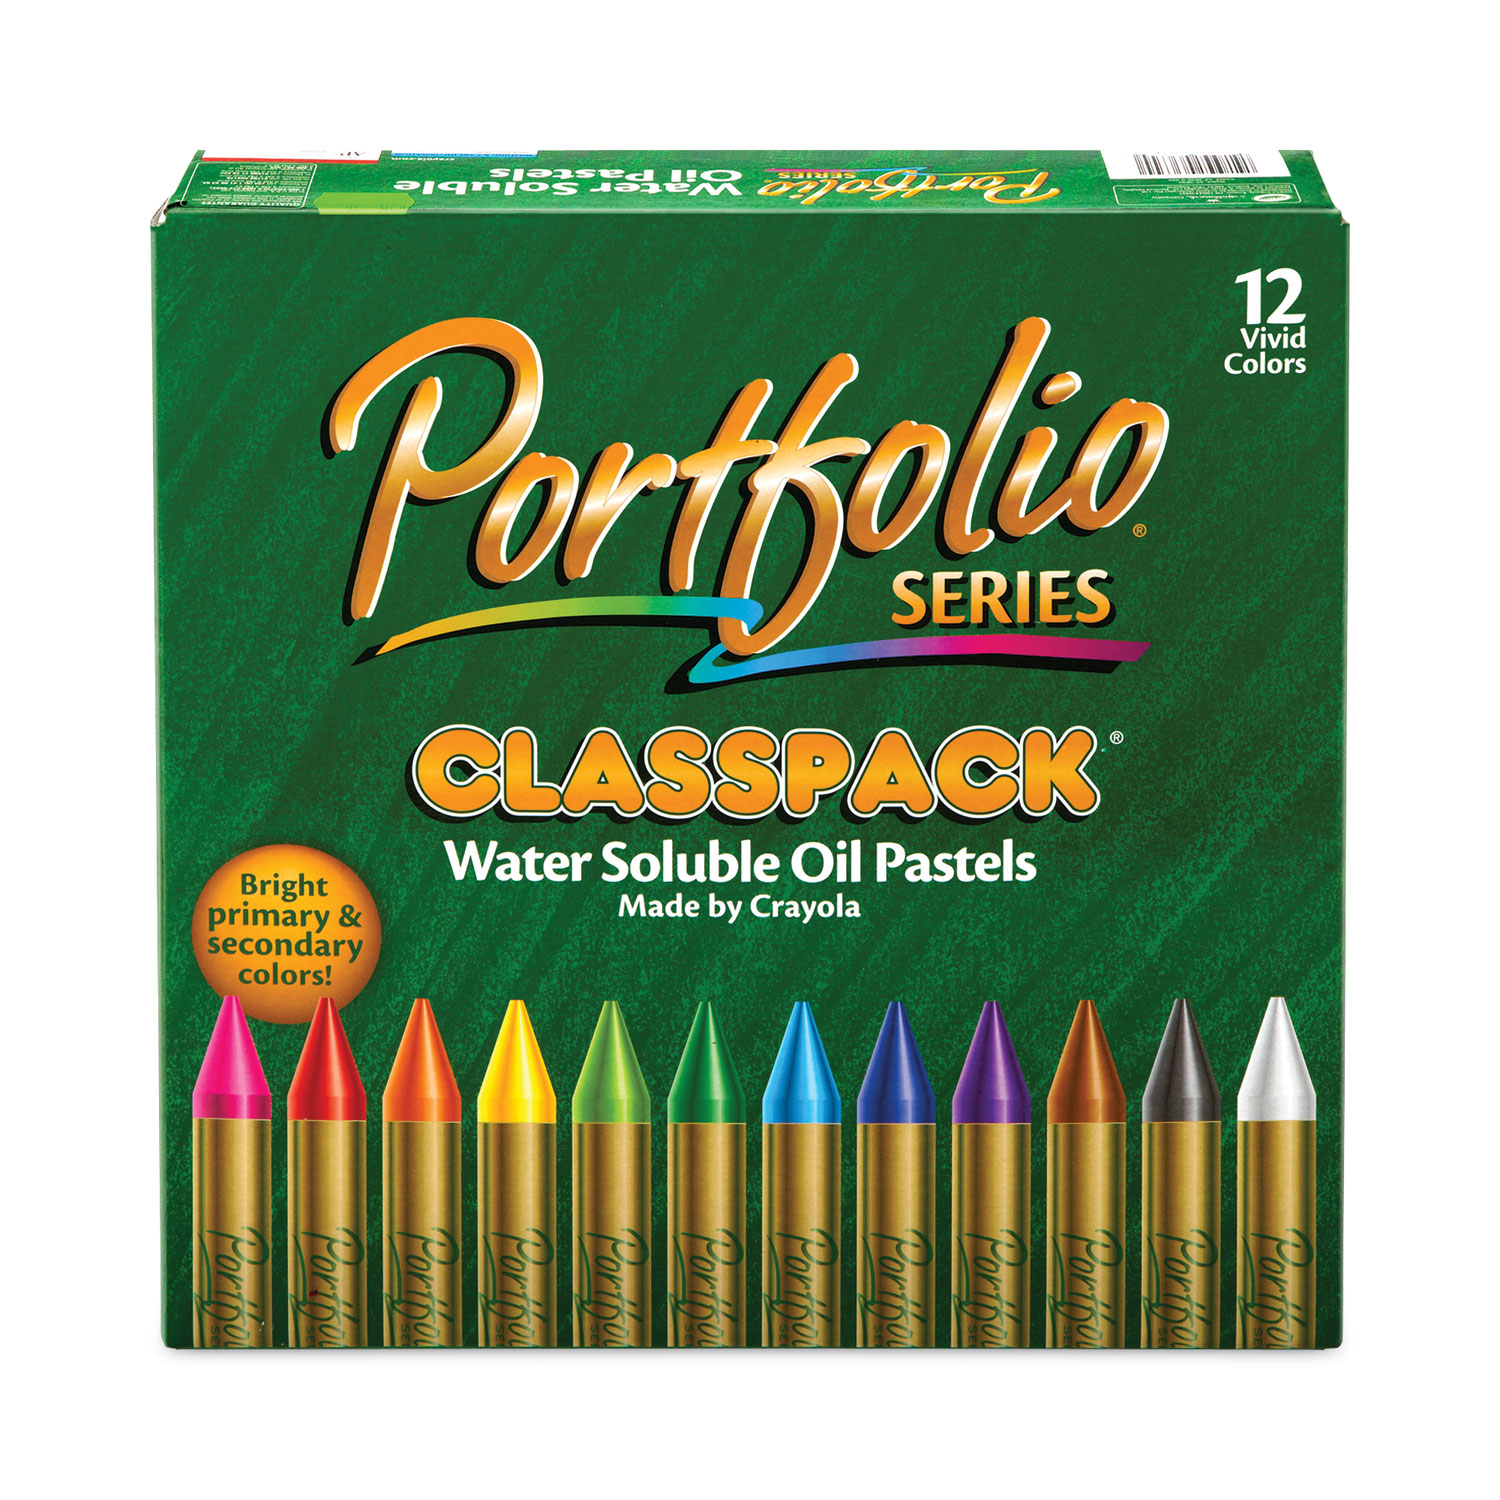 Prang Sketcho Oil Crayons In Original Vintage Box 12 Colors